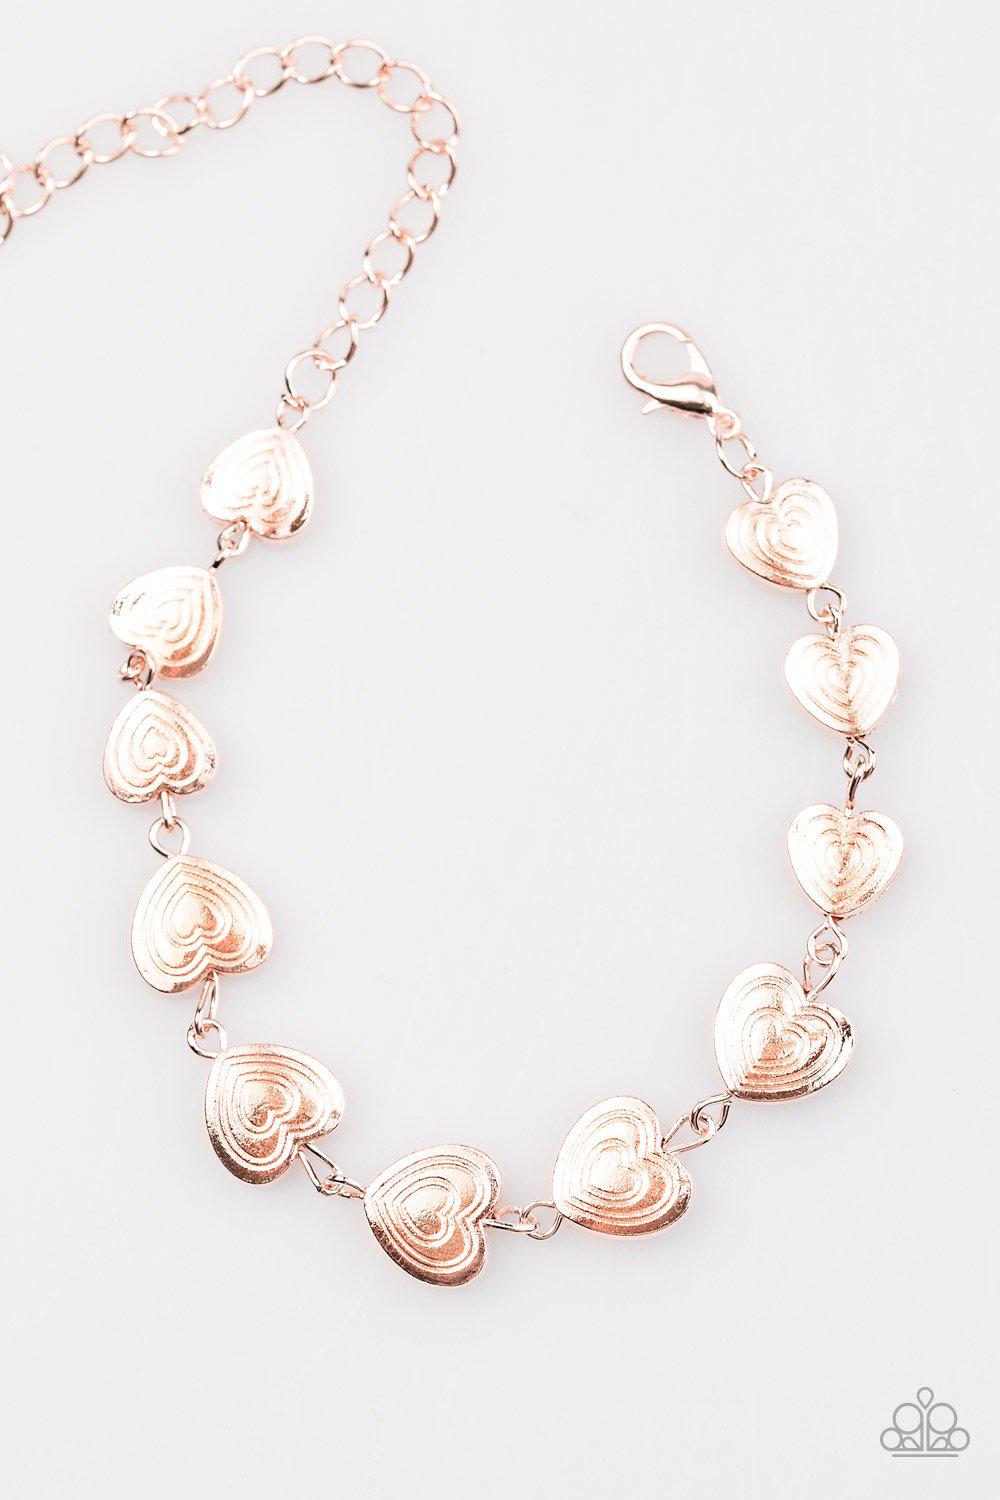 No Heart Feelings Gold Heart Bracelet - Paparazzi Accessories-CarasShop.com - $5 Jewelry by Cara Jewels